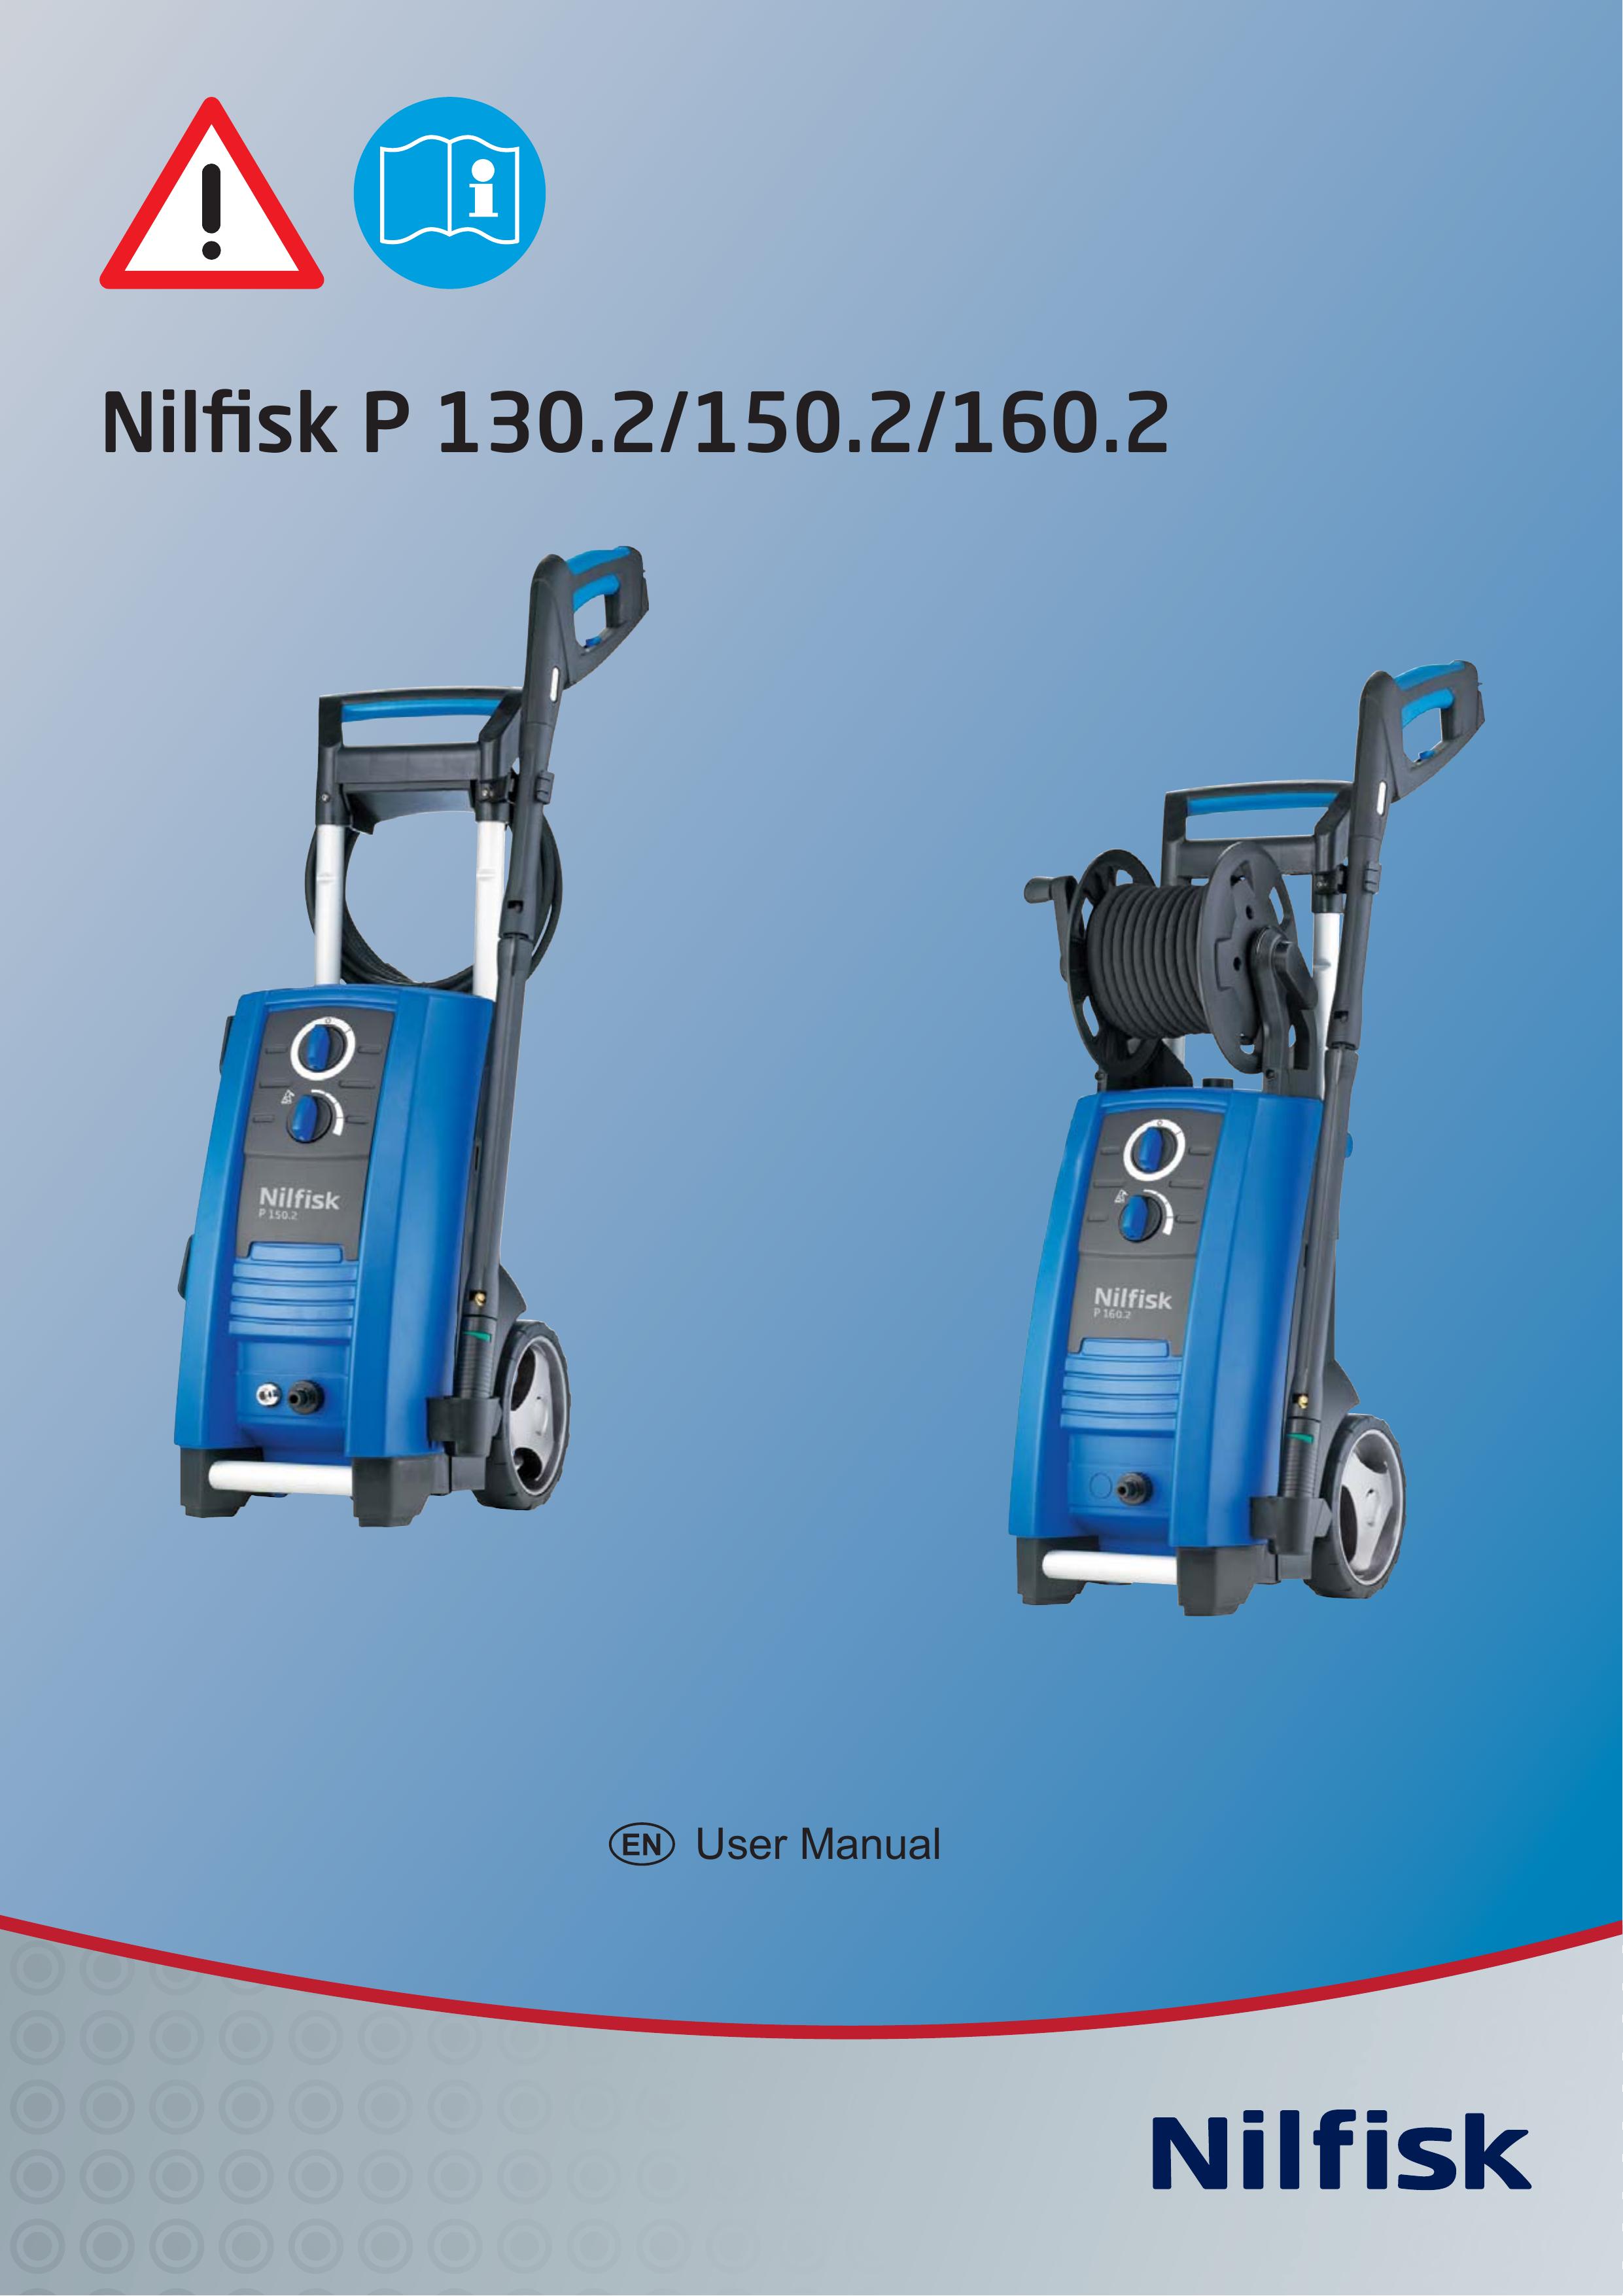 Nilfisk-Advance America P 130.2 Pressure Washer User Manual